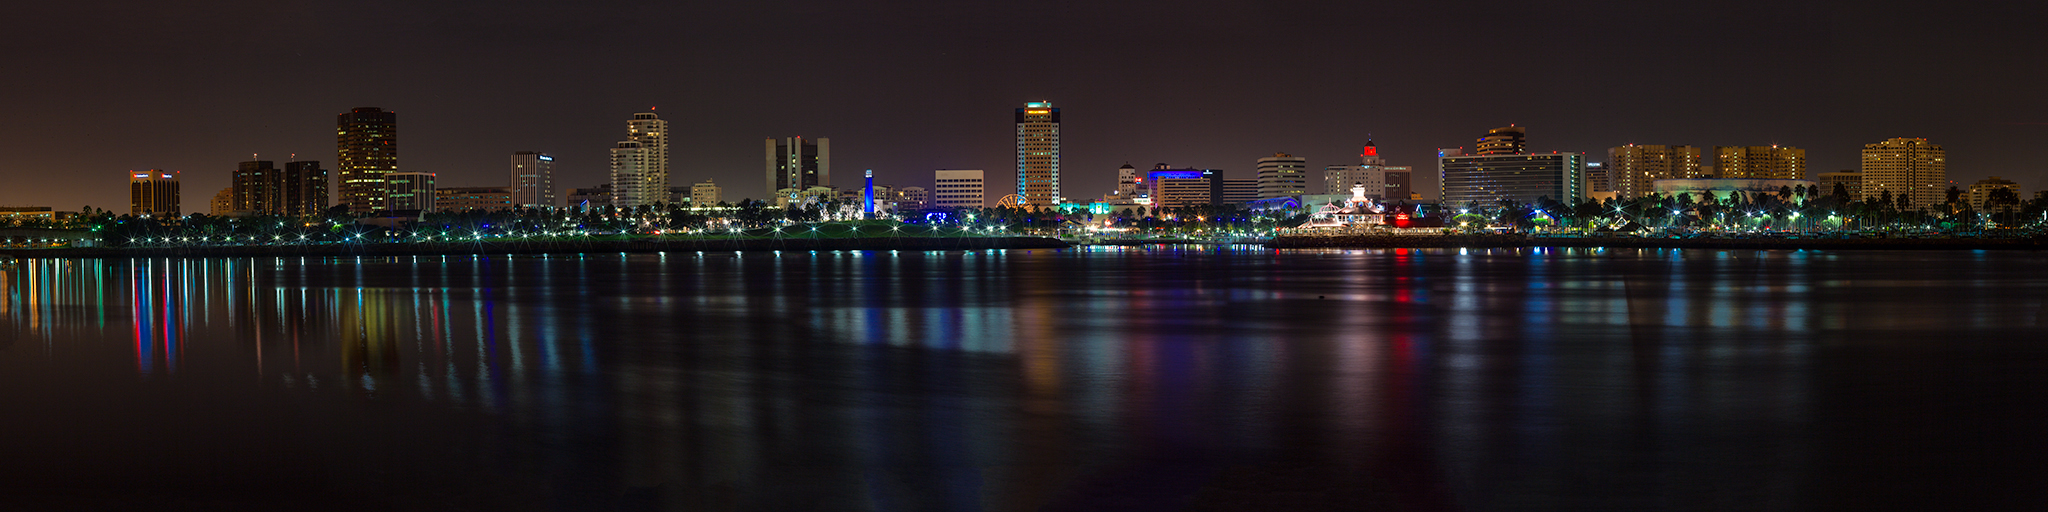 Long Beach 2014 Panorama1.jpg